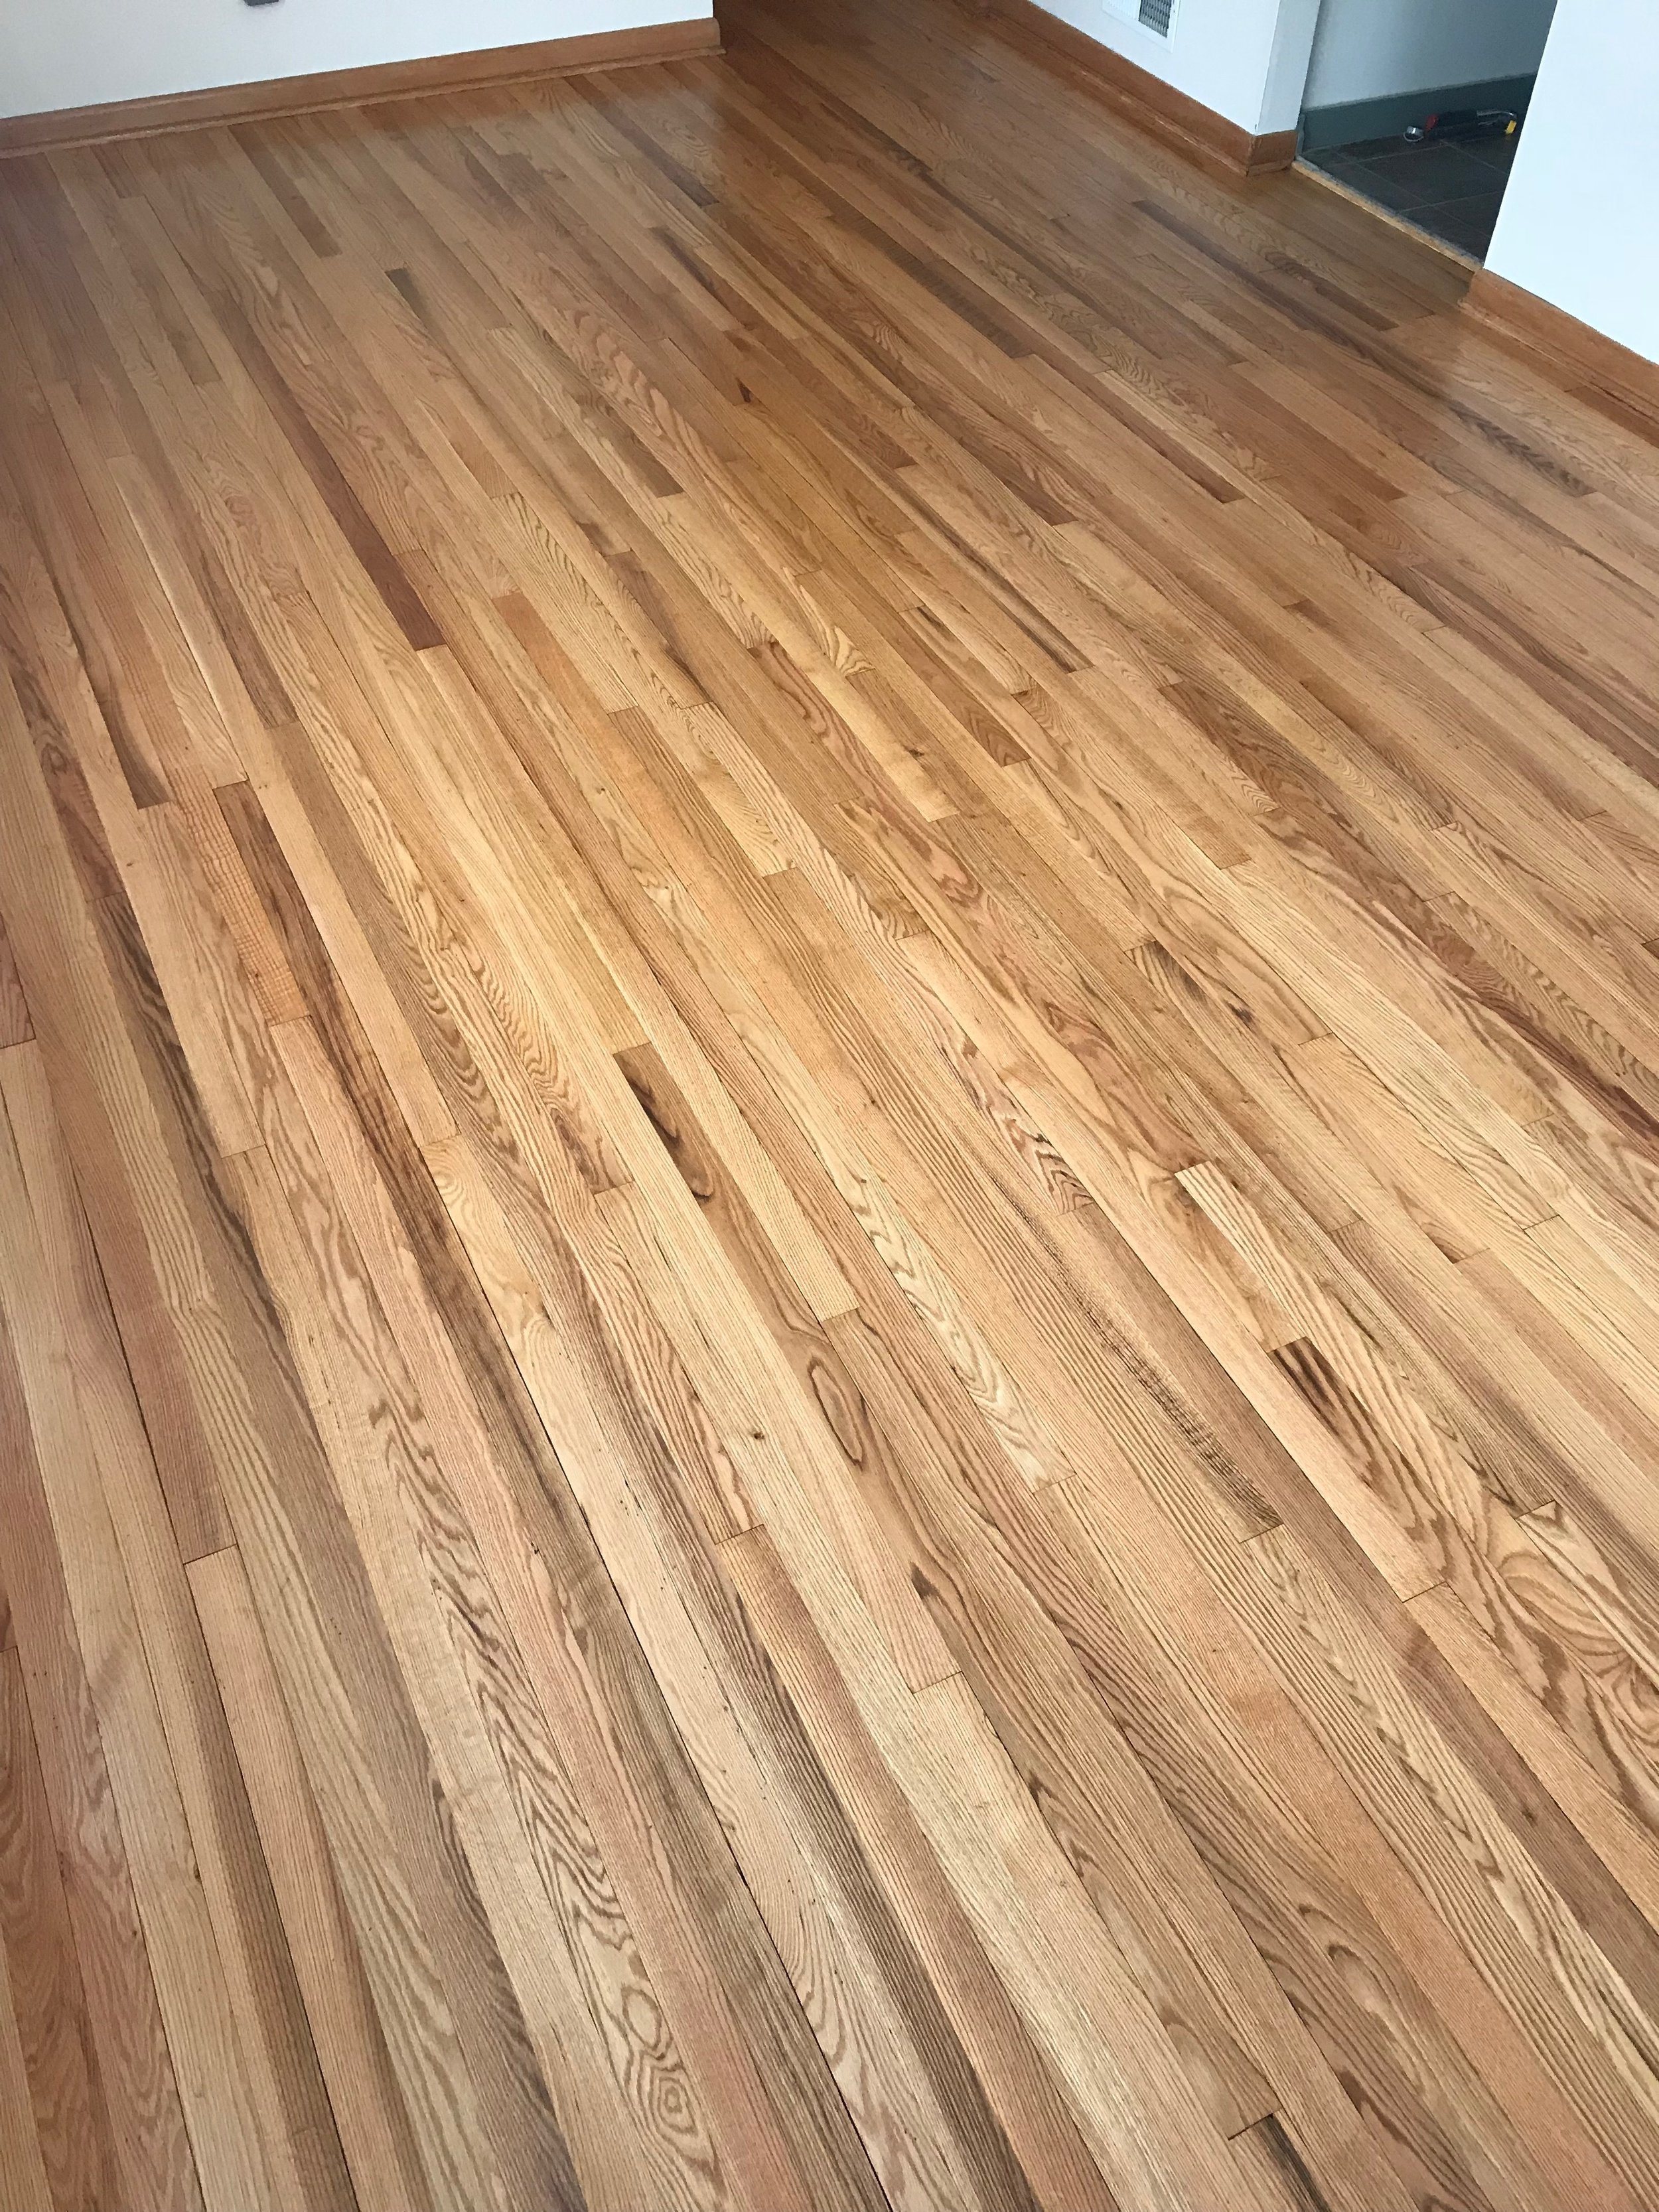 Wood Floor Refinishing Eau Claire, Hardwood Flooring Eau Claire Wi